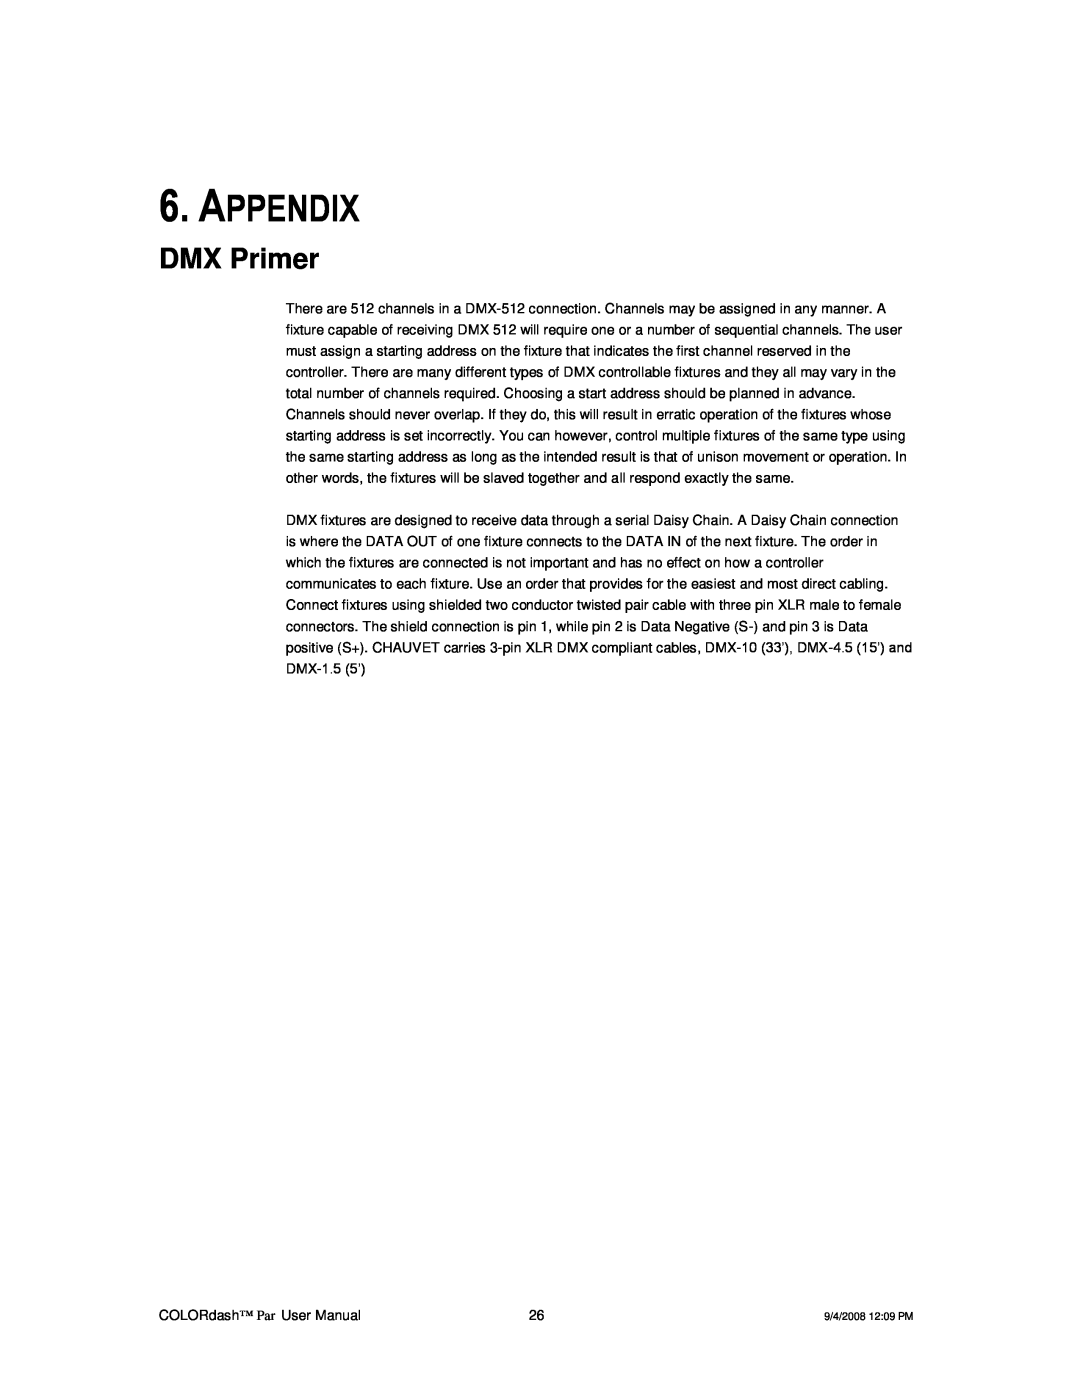 Chauvet DMX512 user manual Appendix, DMX Primer 